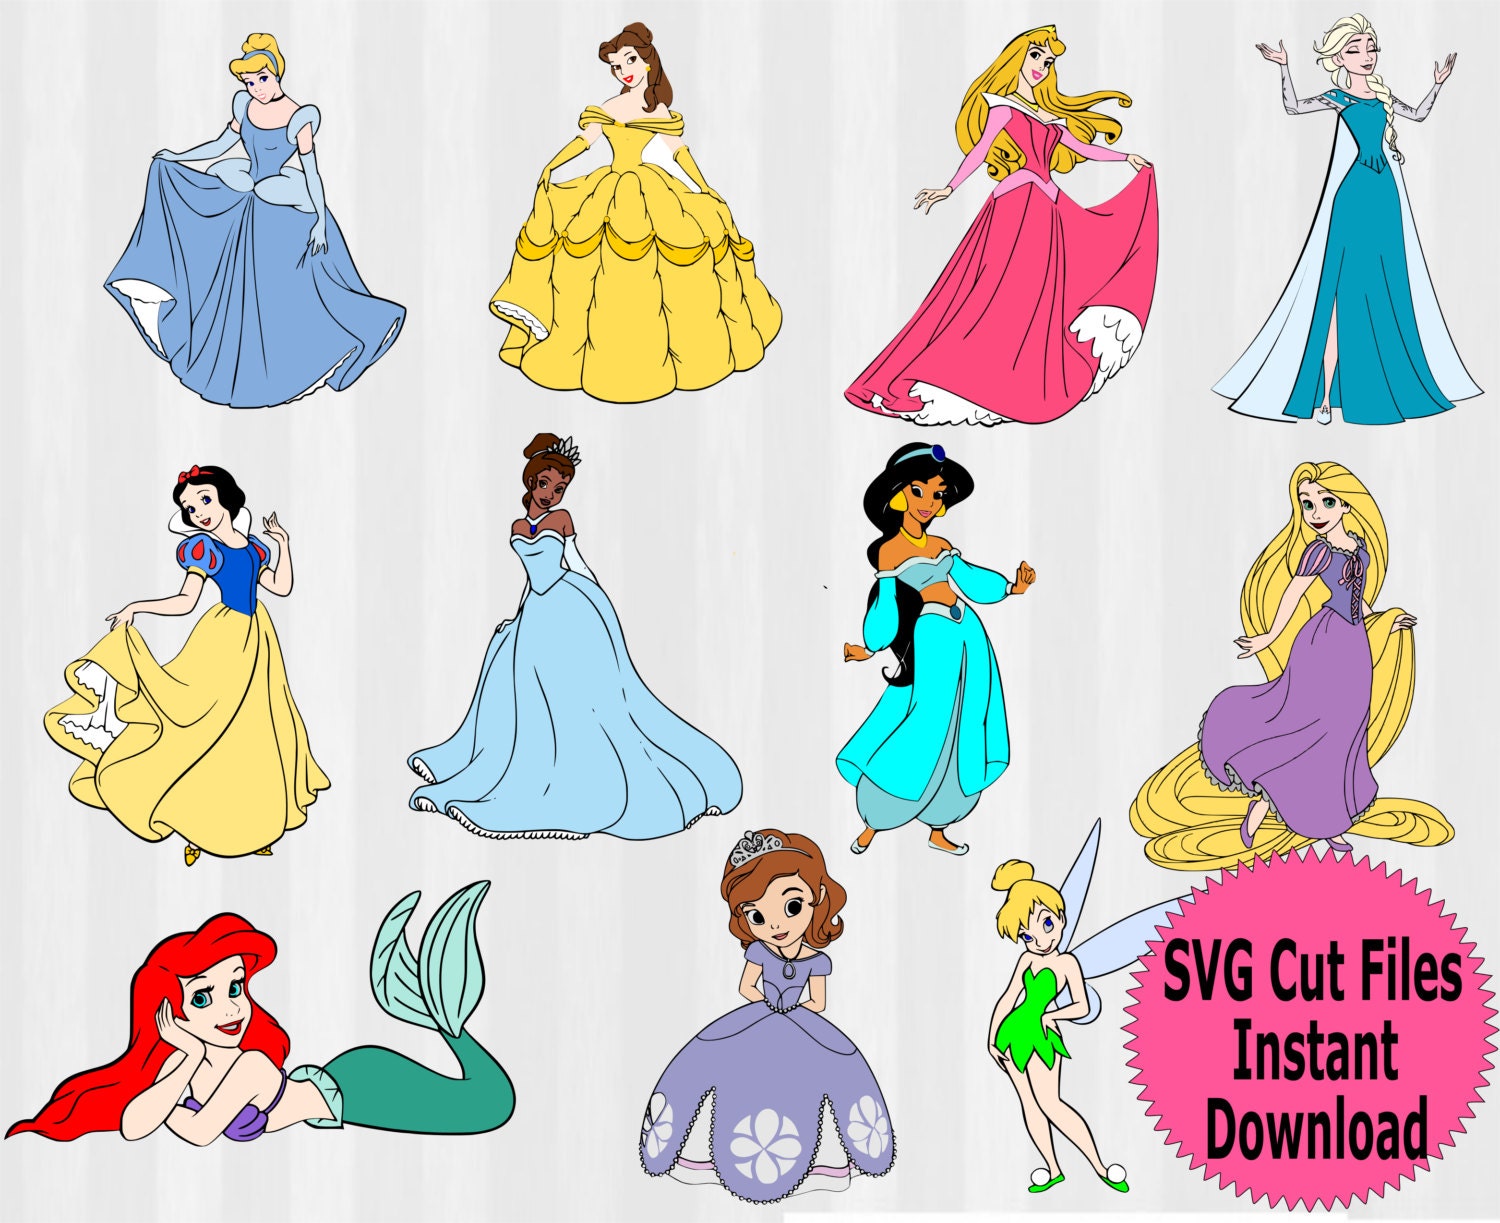 Disney Princess Svg Files Free - 211+ SVG Cut File